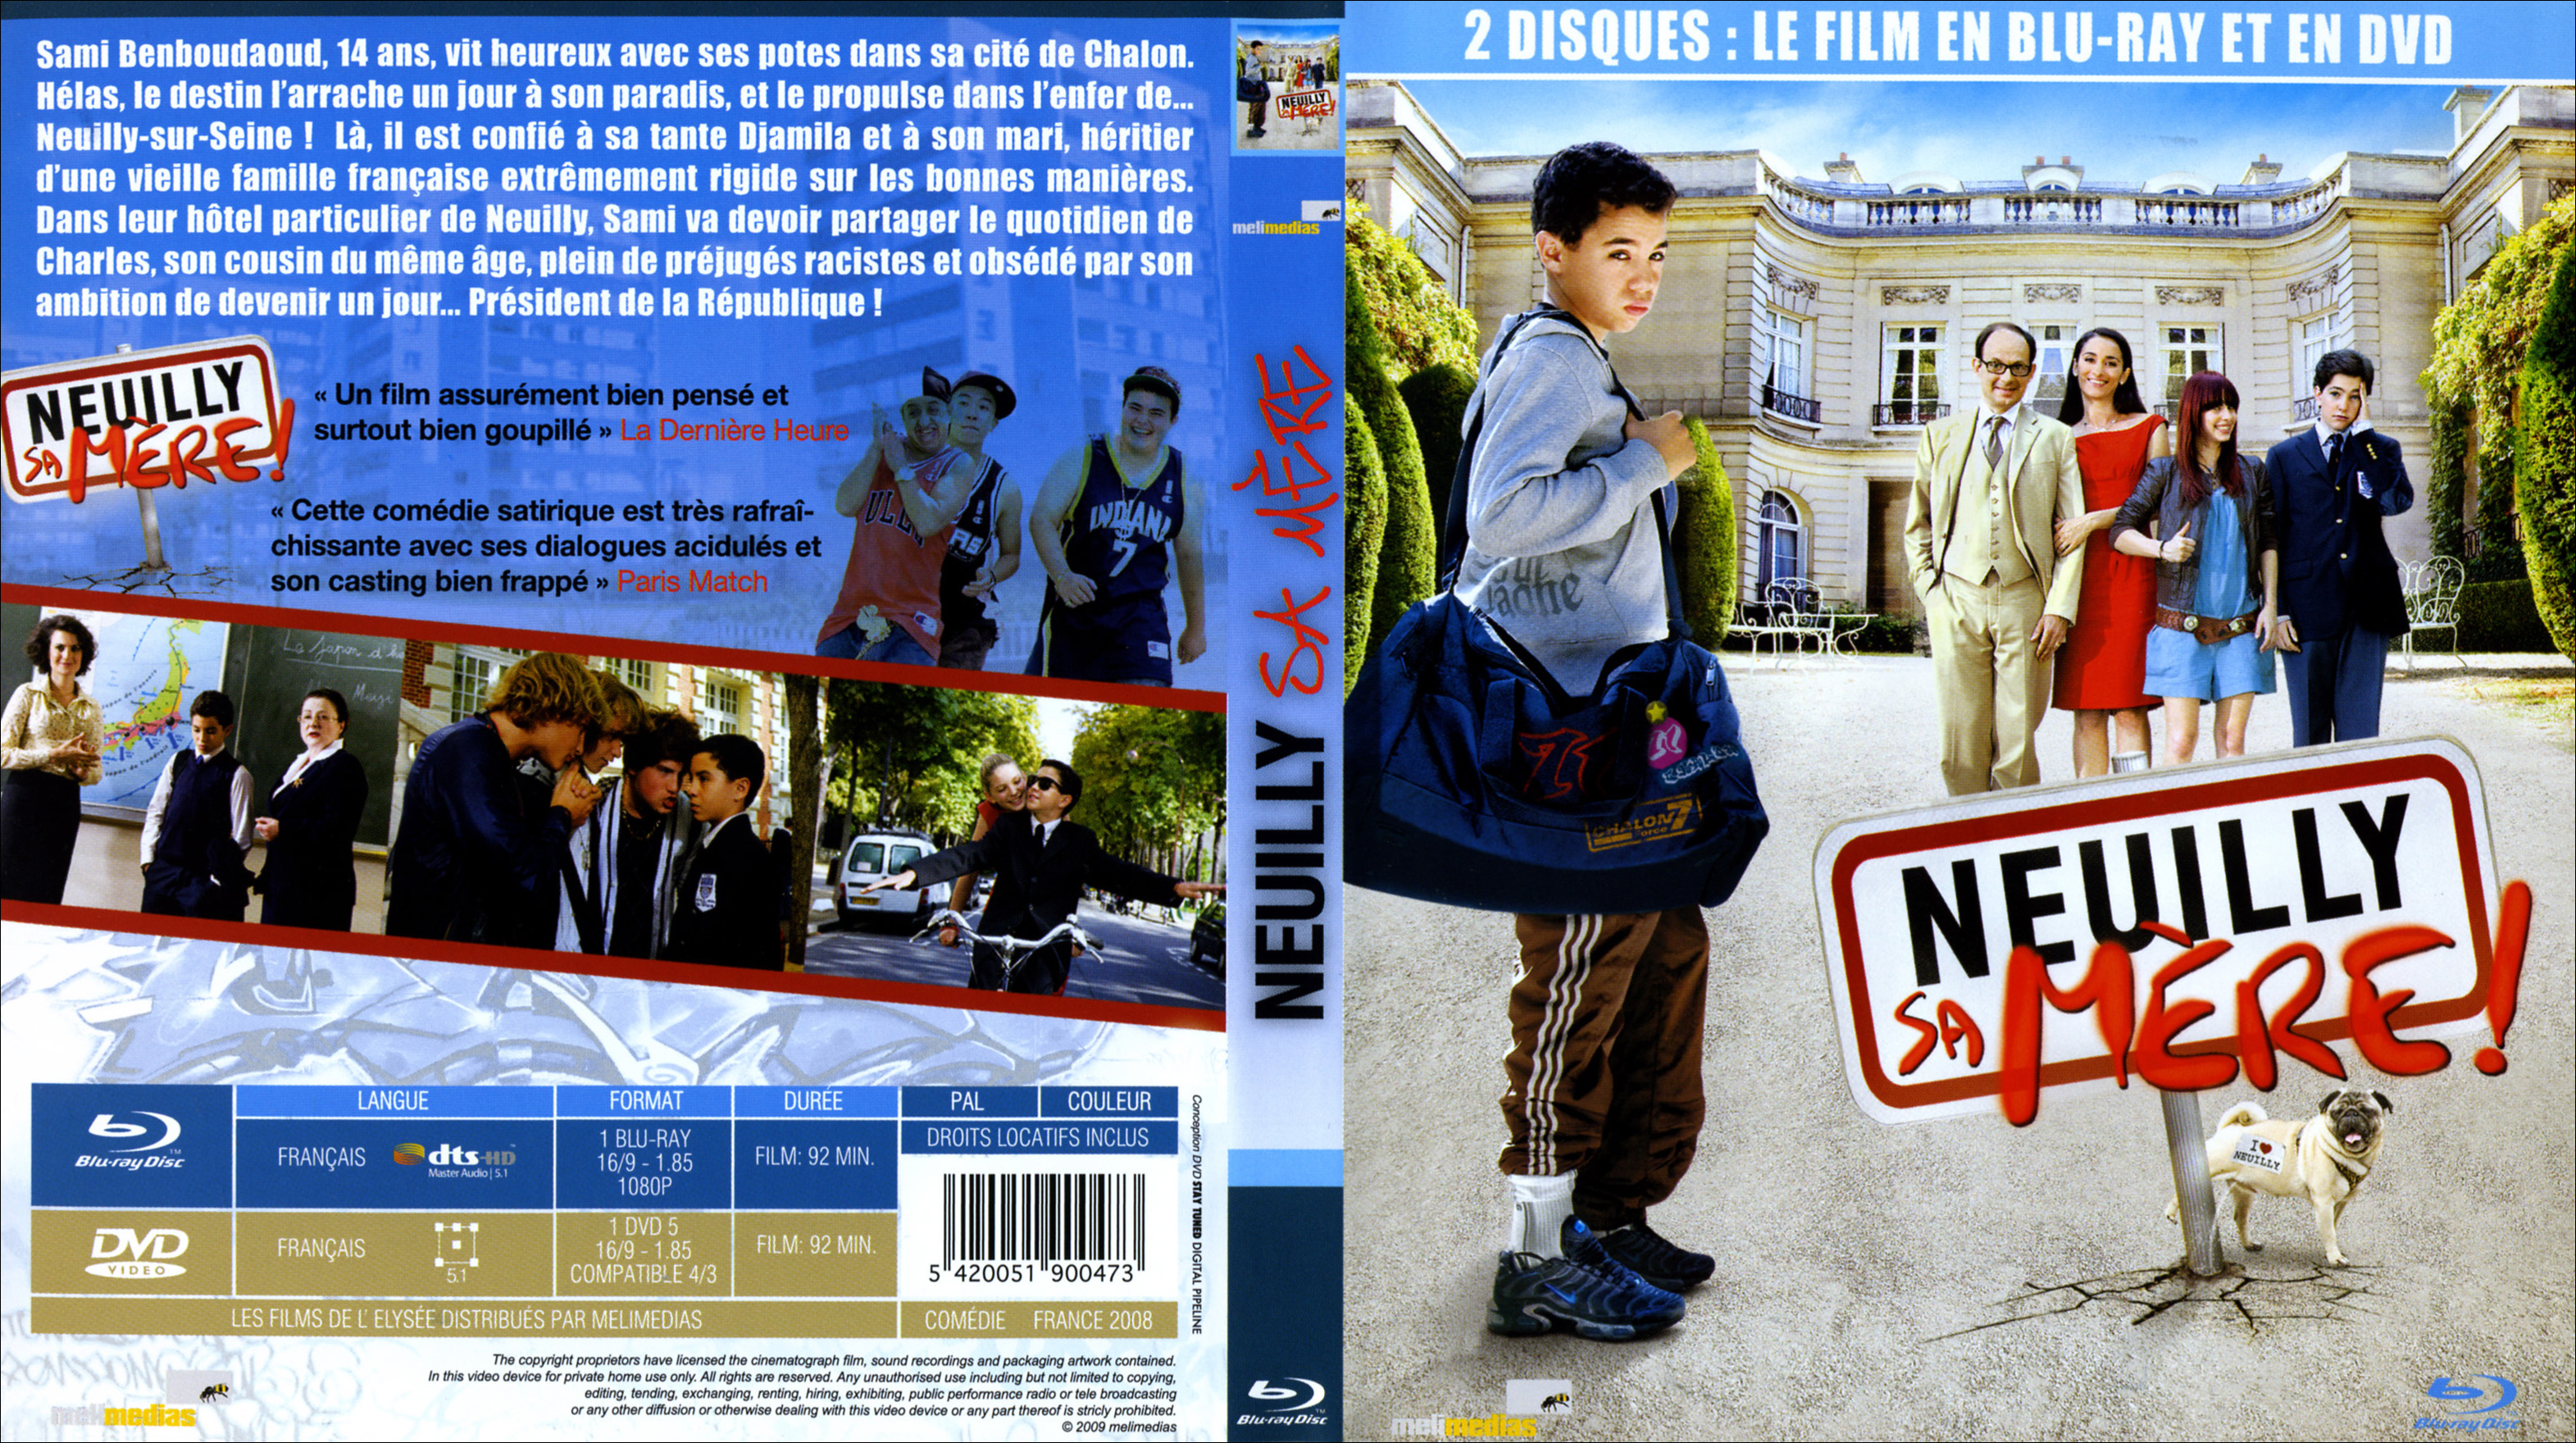 Jaquette DVD Neuilly sa mre (BLU-RAY)